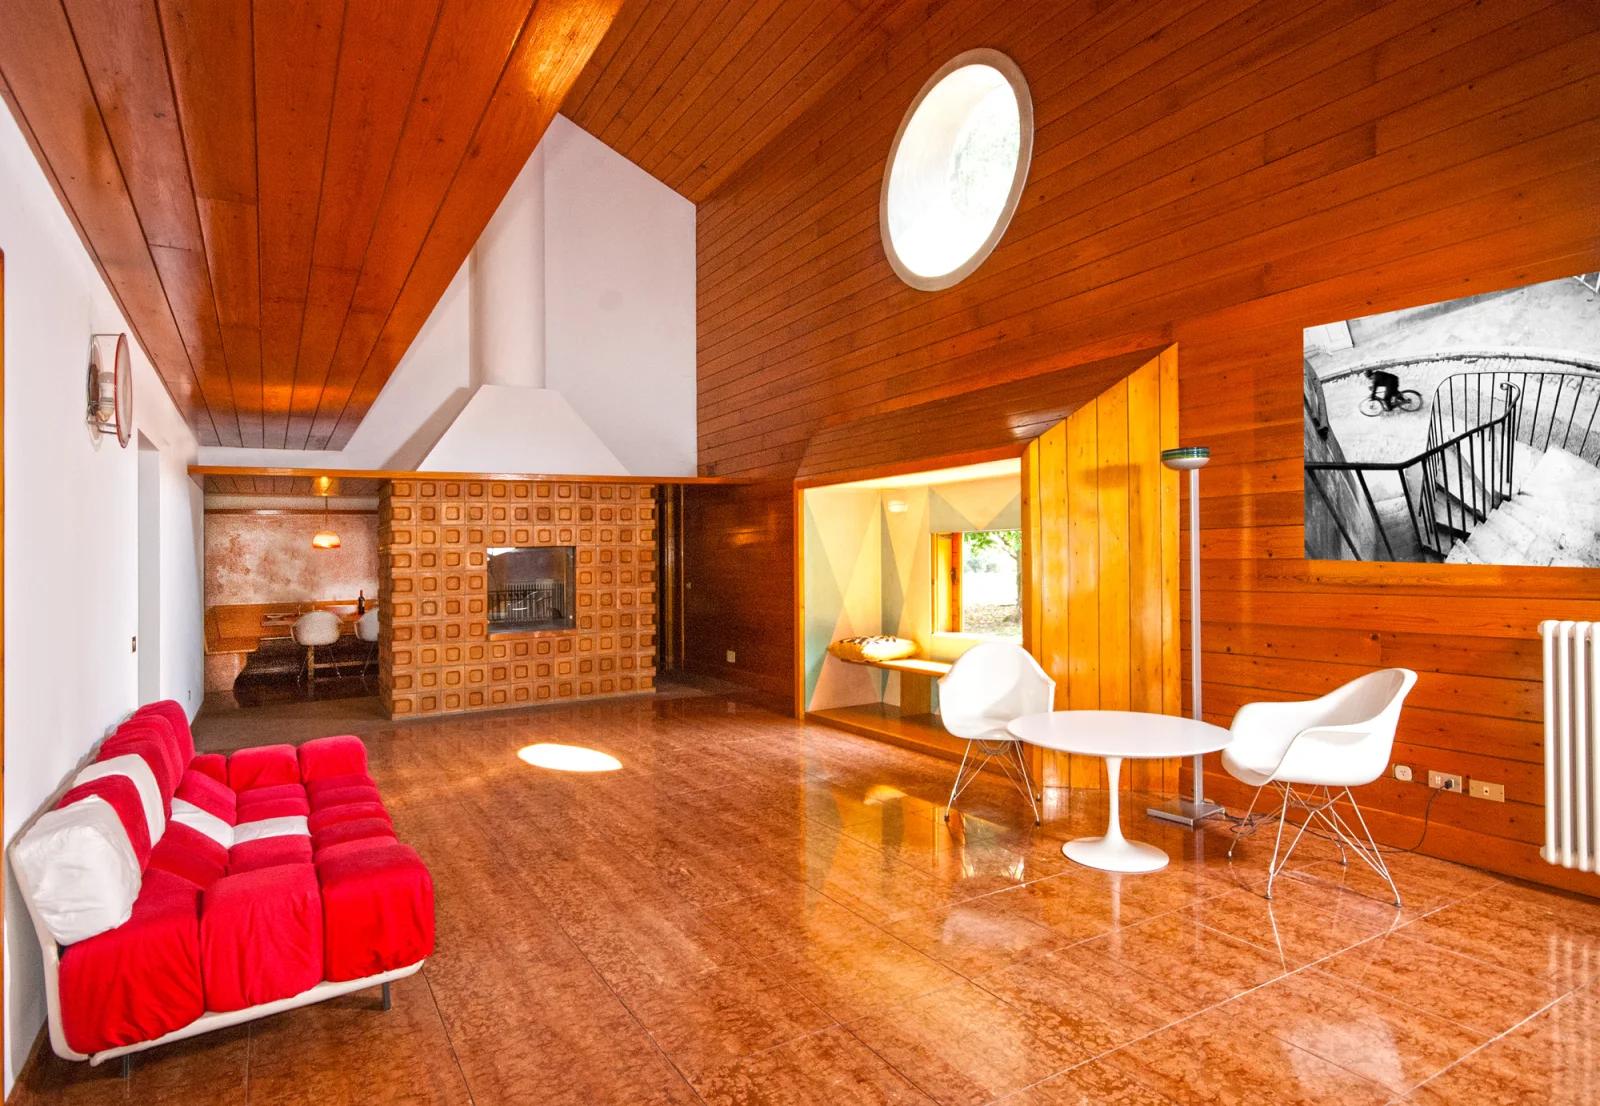 Sala dentro Casa moderna y orgánica diseñada por un arquitecto - 0